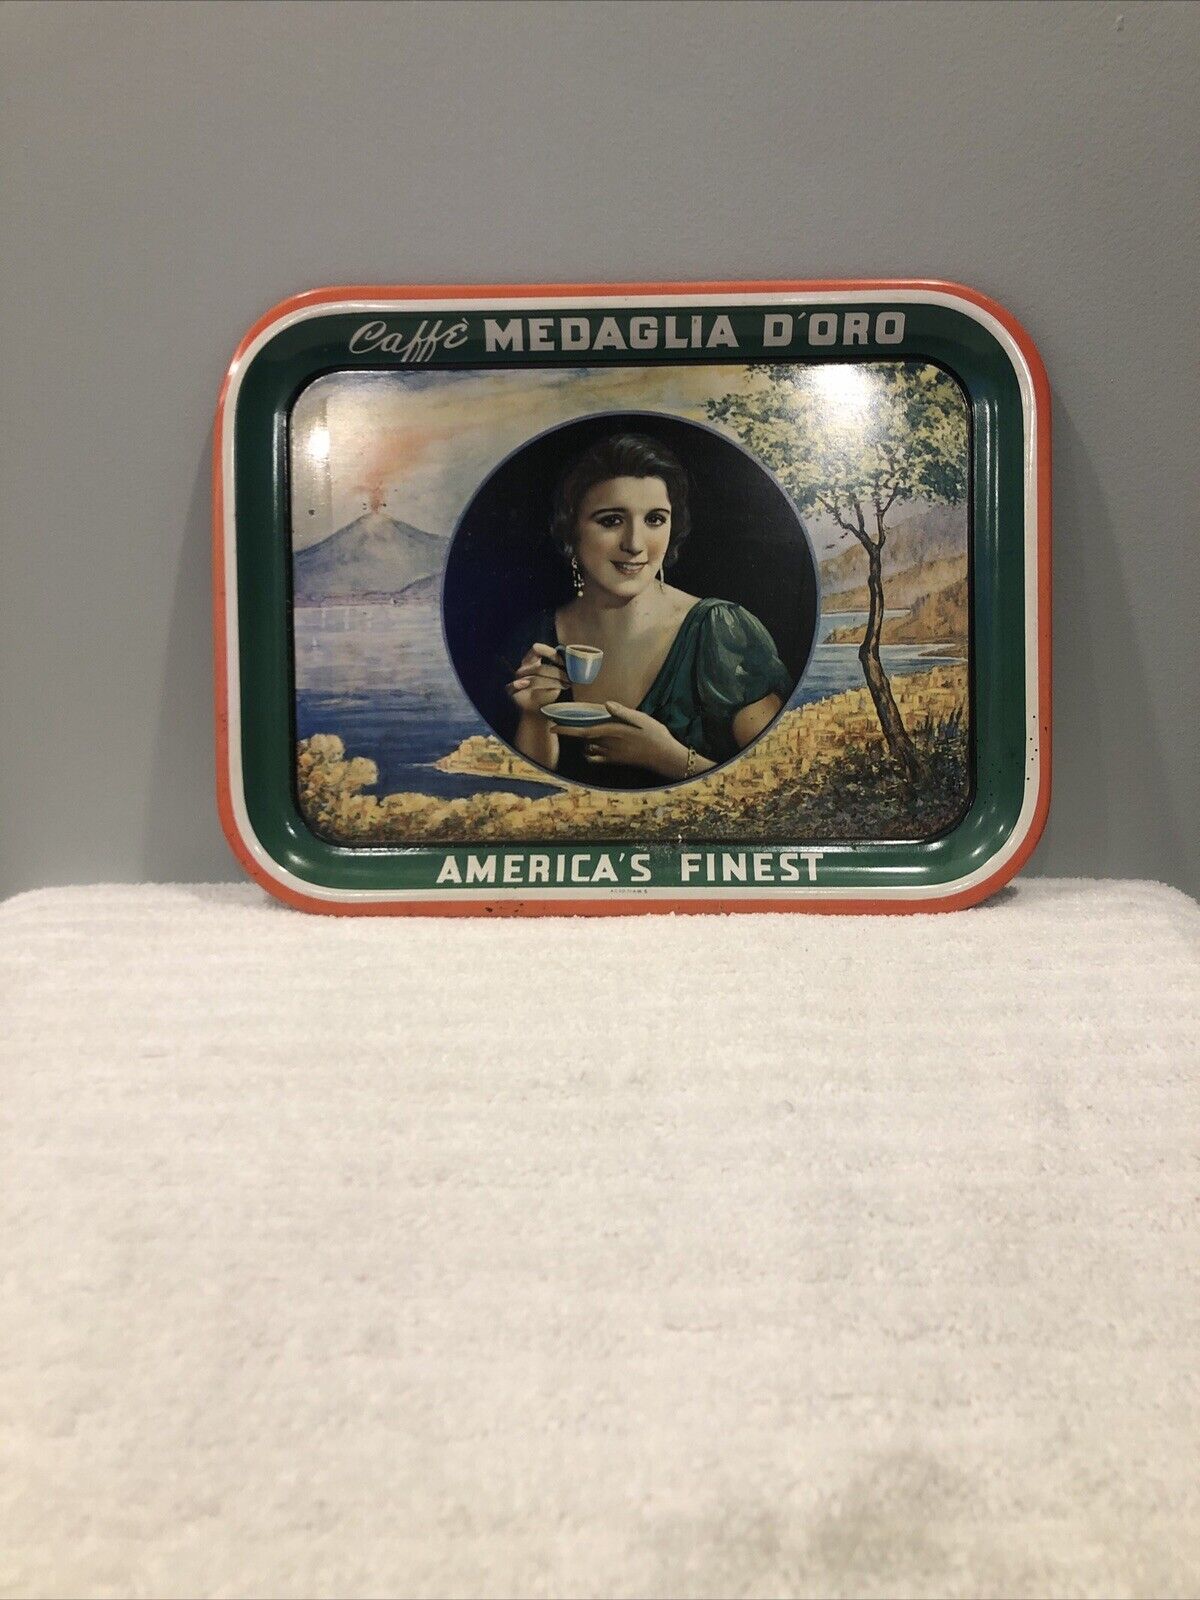 Vintage Caffe Medaglia D'oro America's Finest Coffee advertising tray